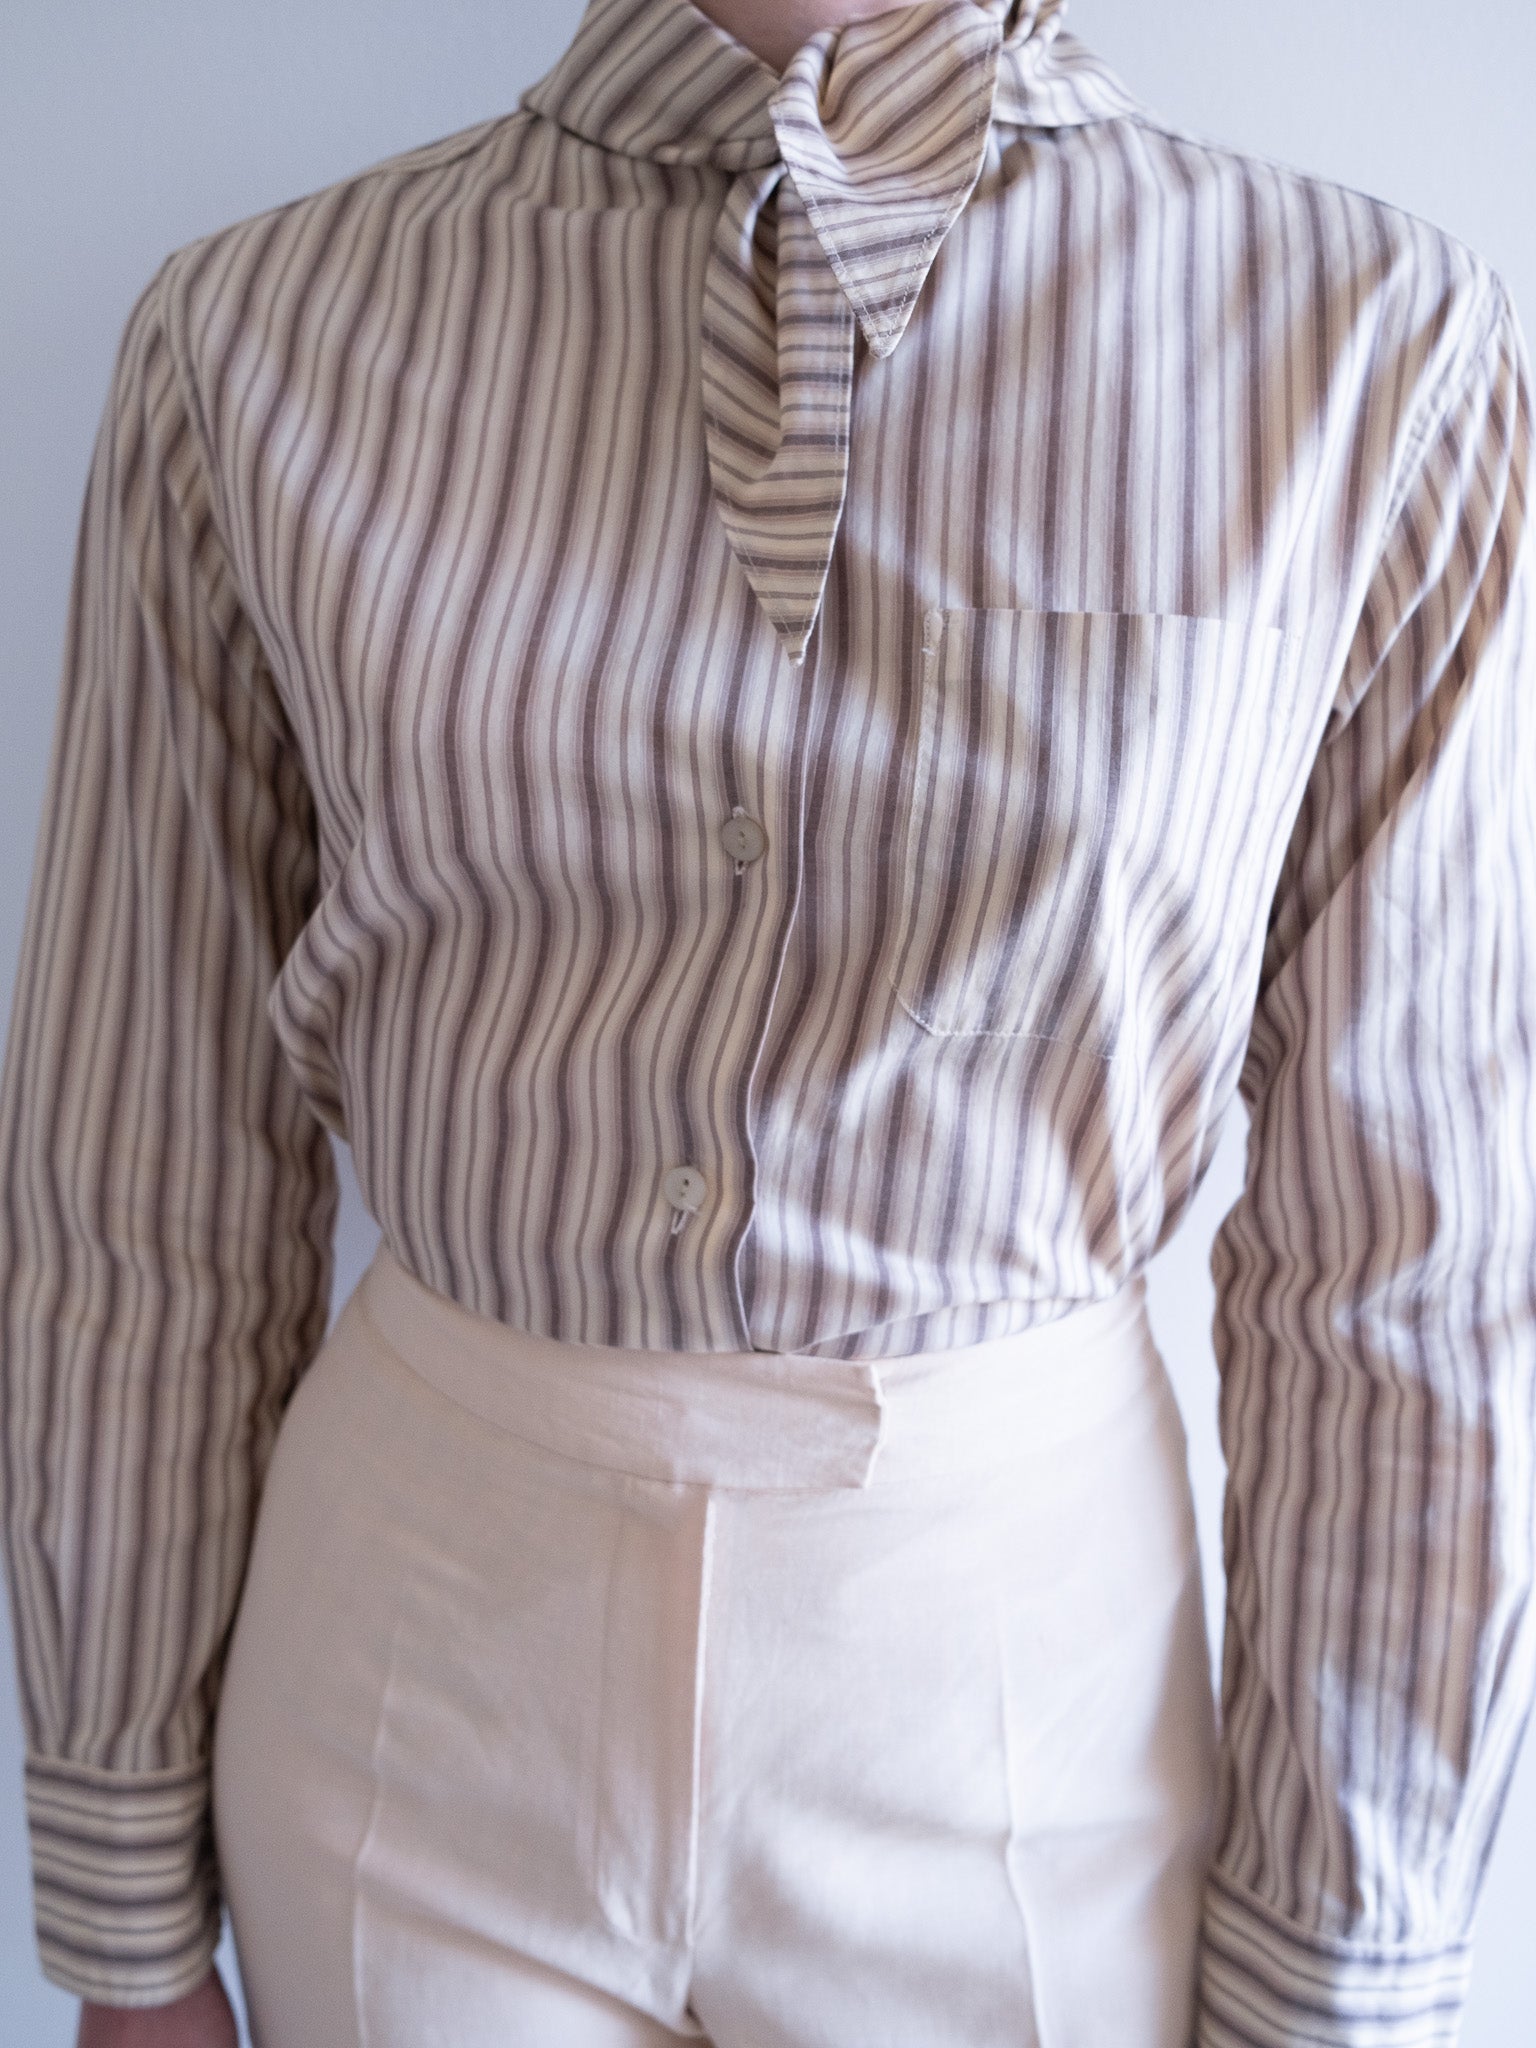 Roméo Gigli striped shirt